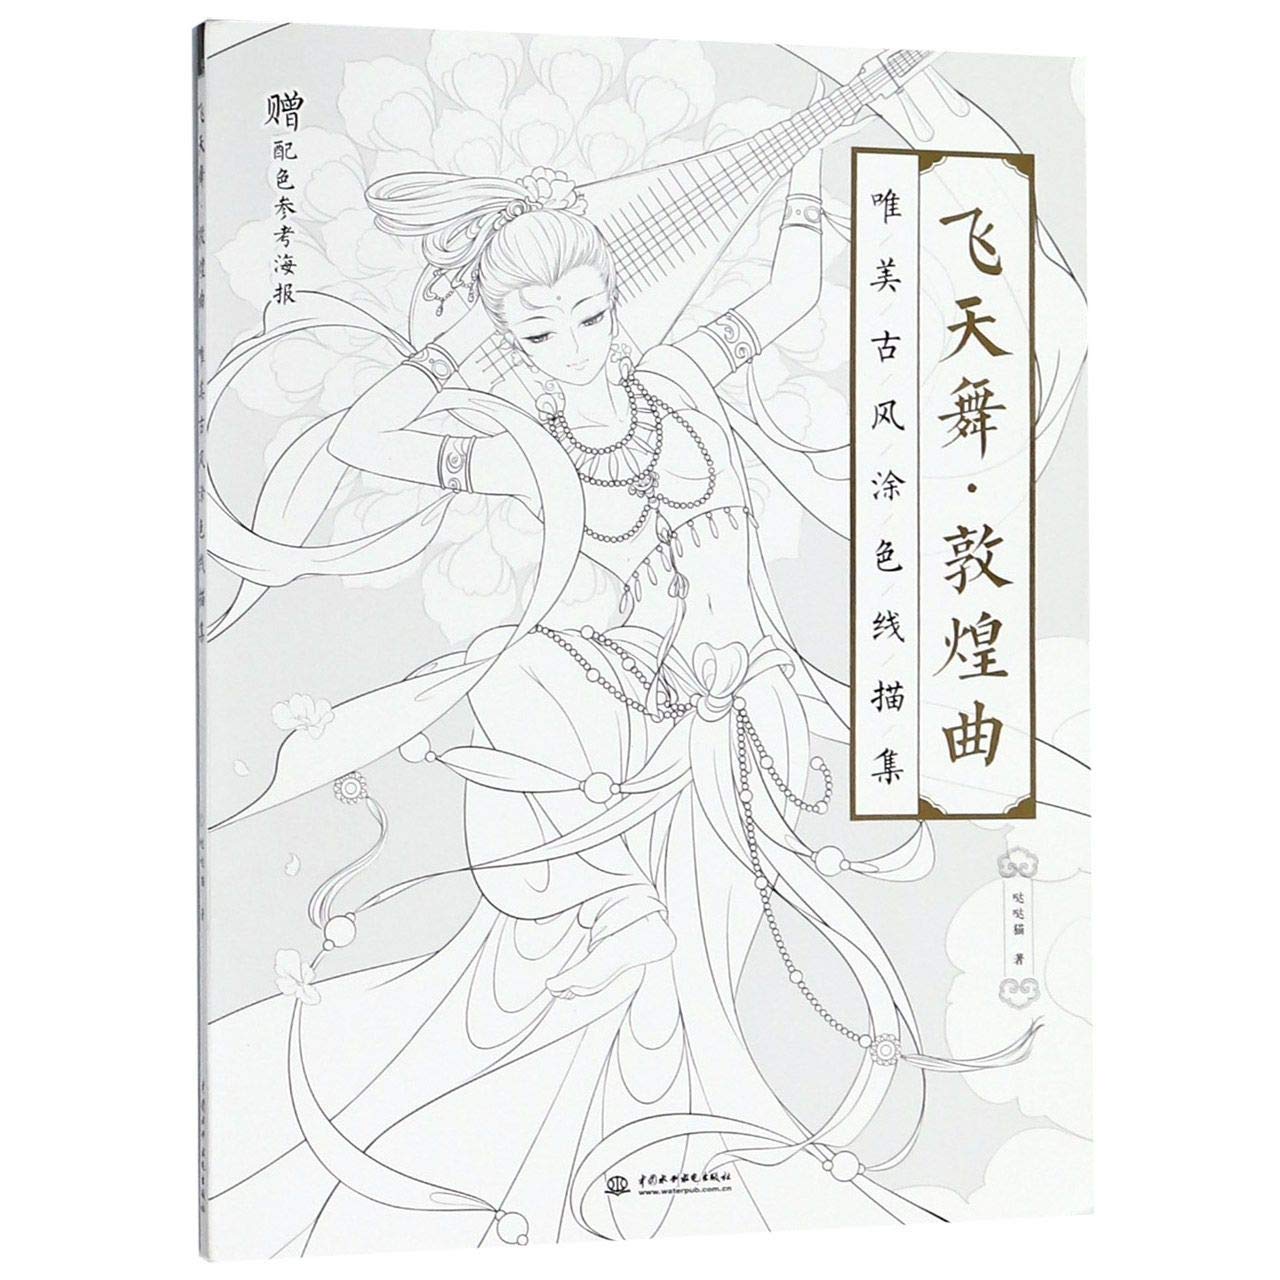 Flying Dance in Dunhuang coloring book by Da Da Cat(da da mao)